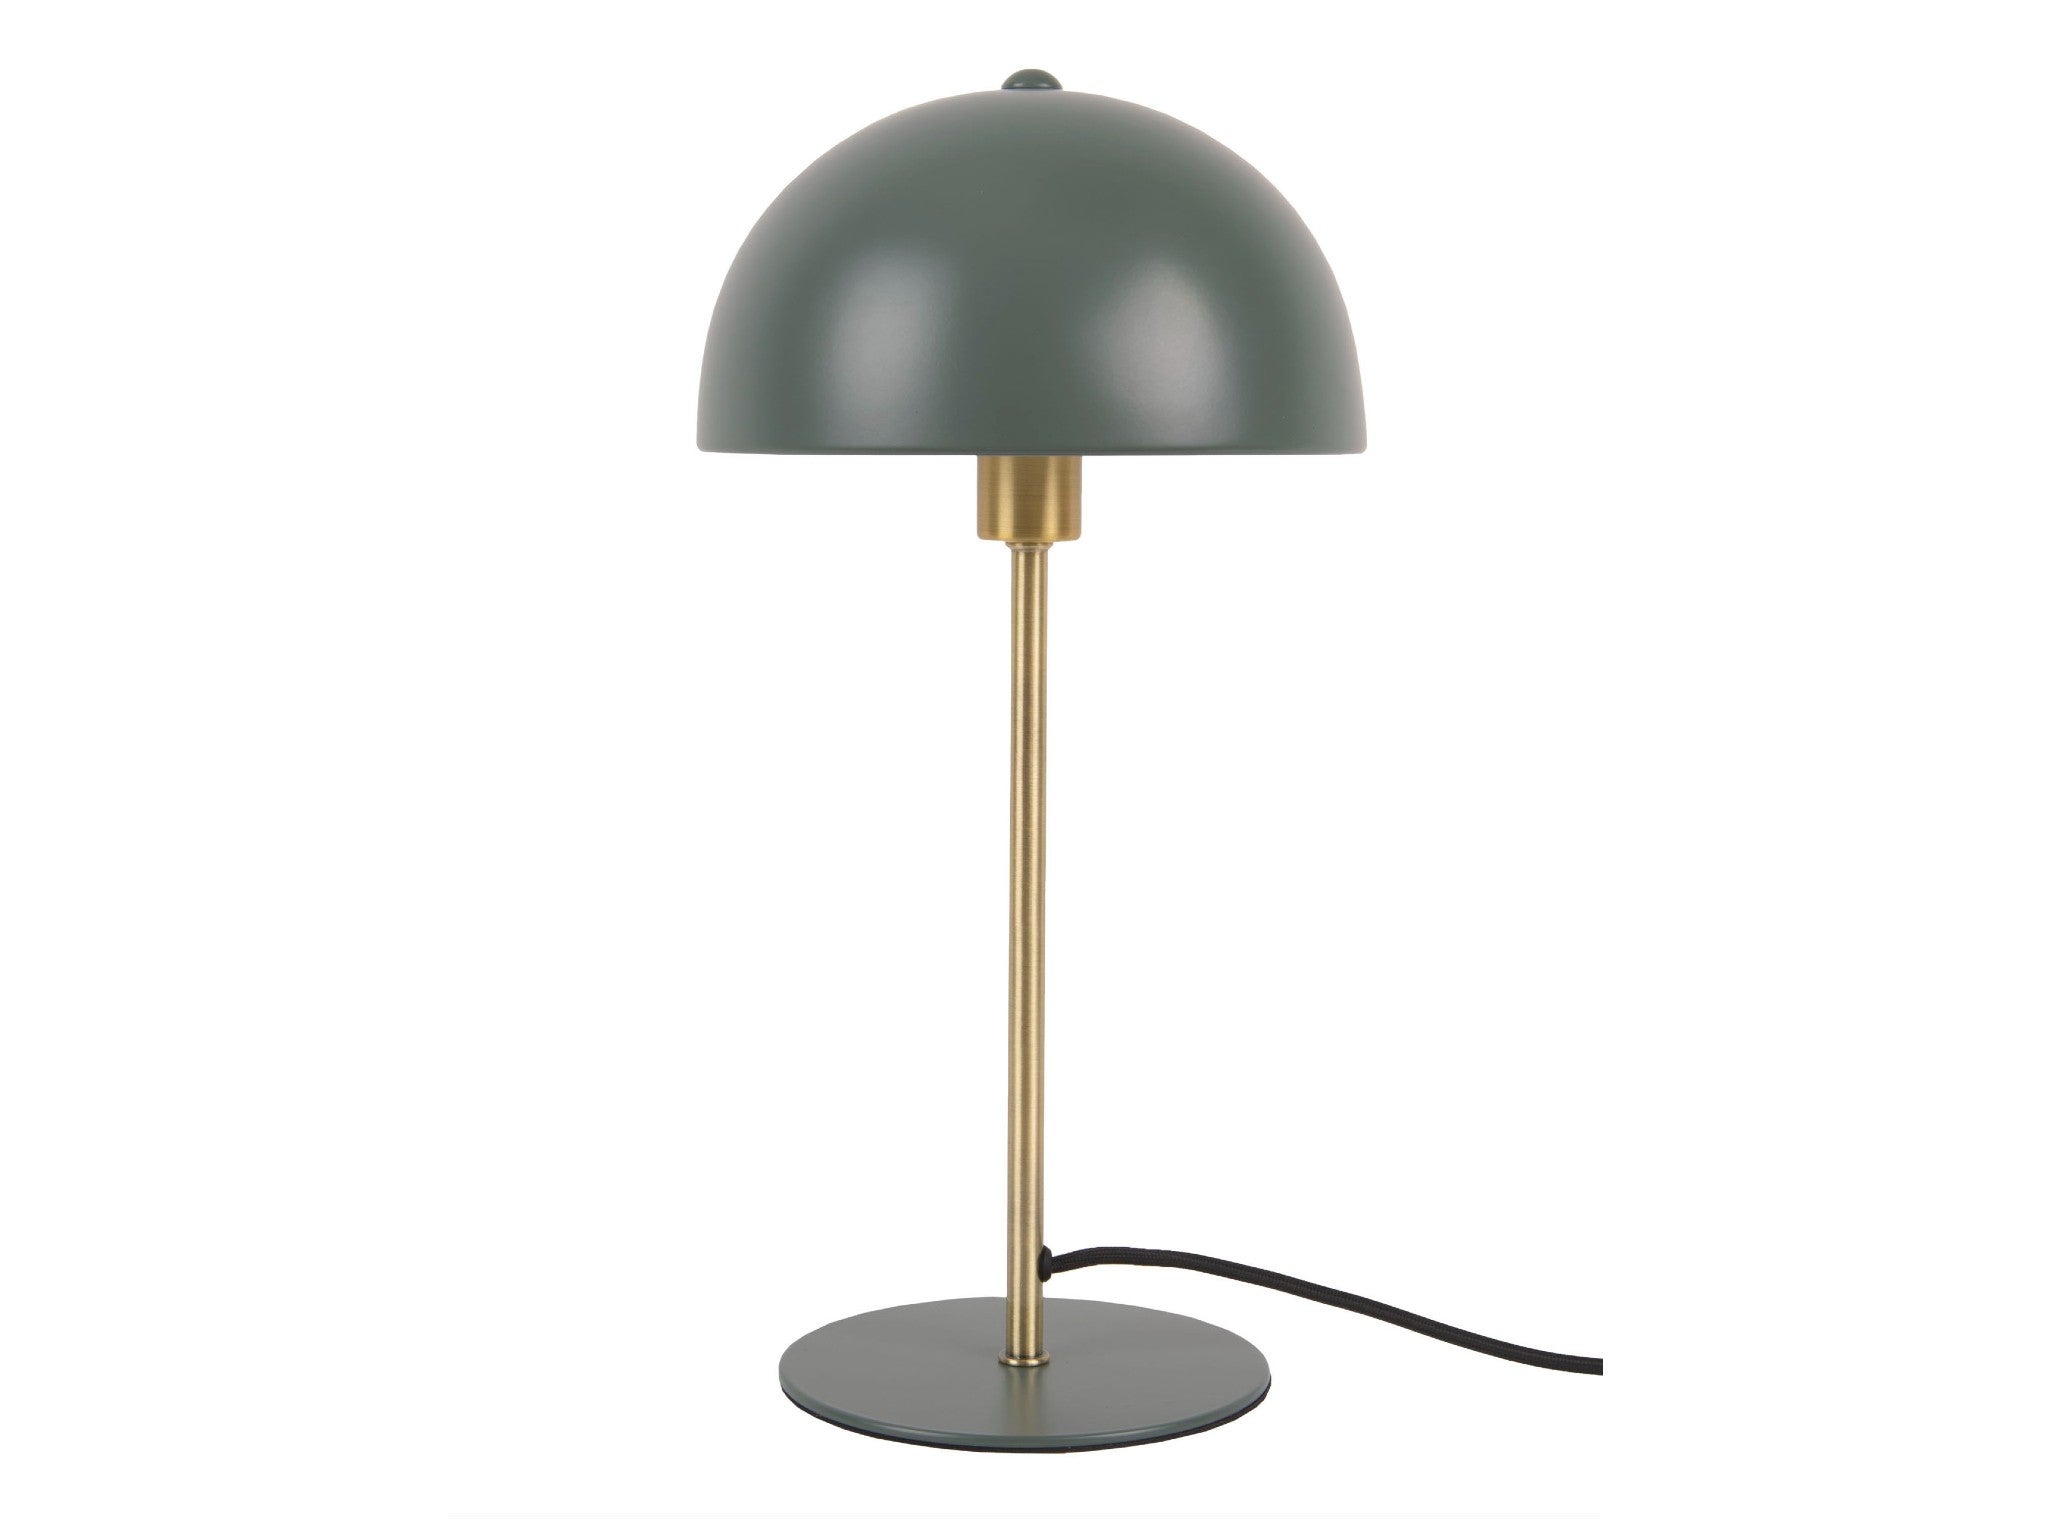 Cox & Cox deep sage & brass rounded desk lamp indybest.jpeg